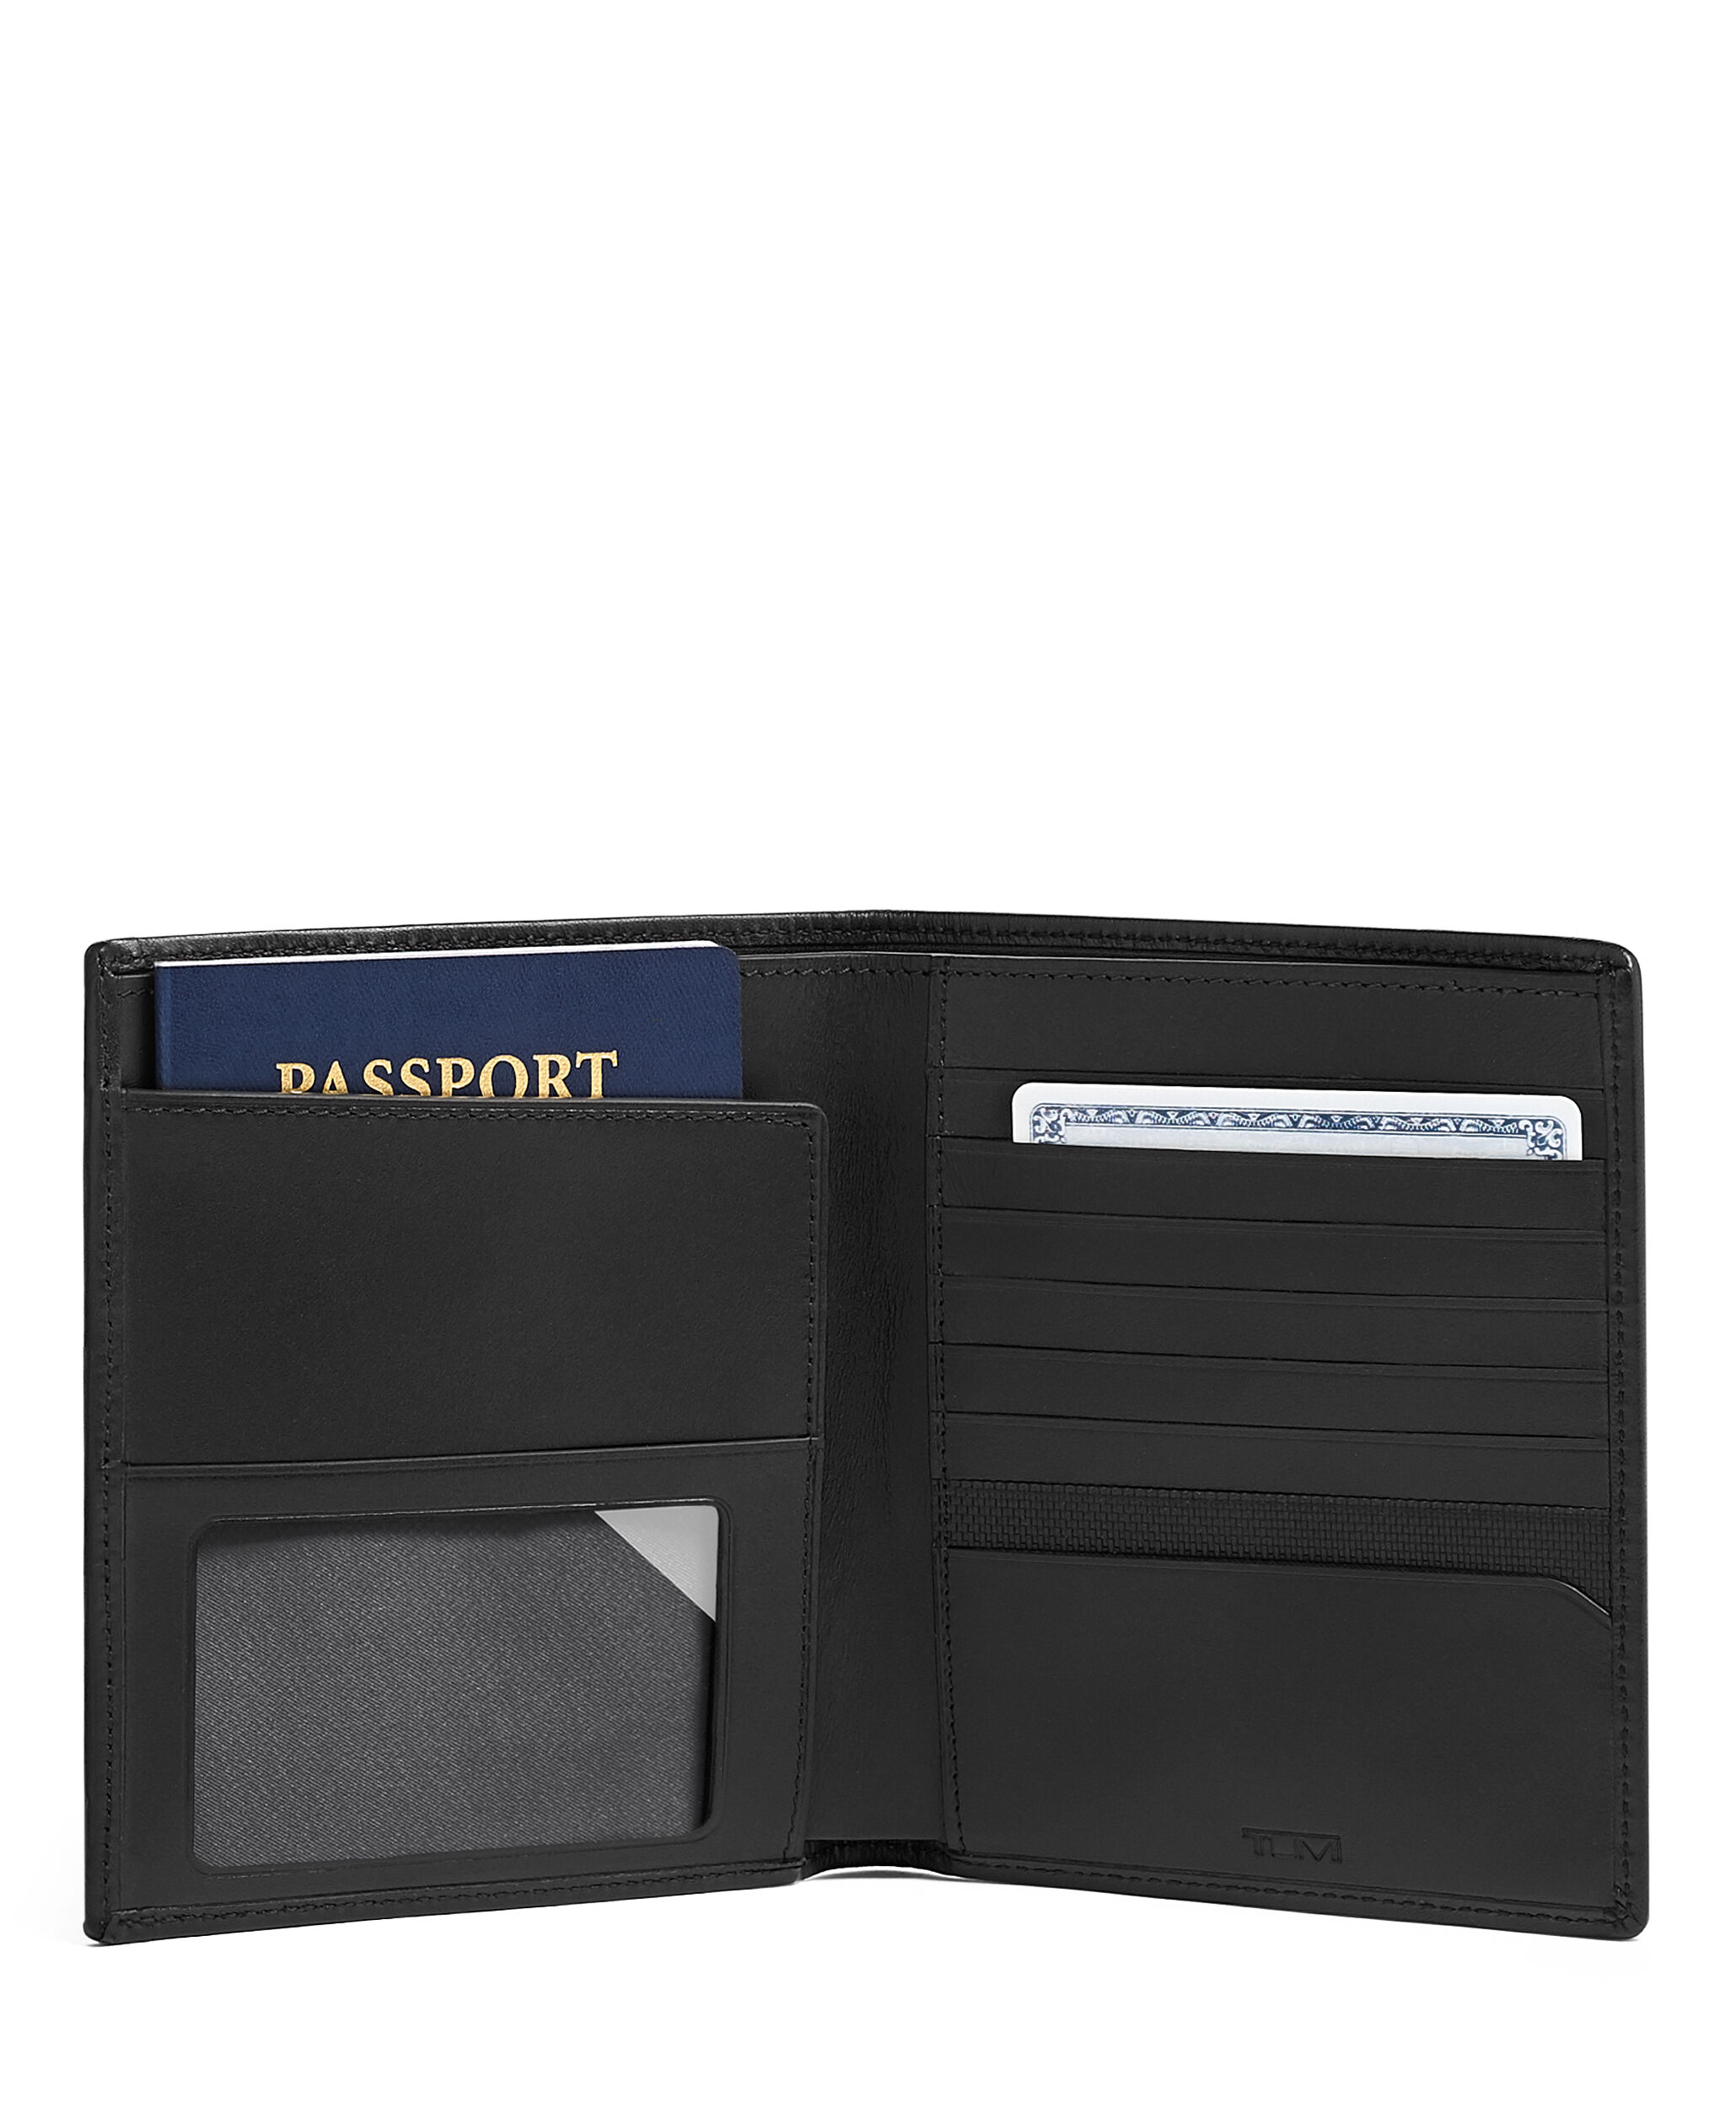 Passport Cases, Covers & Holder | TUMI